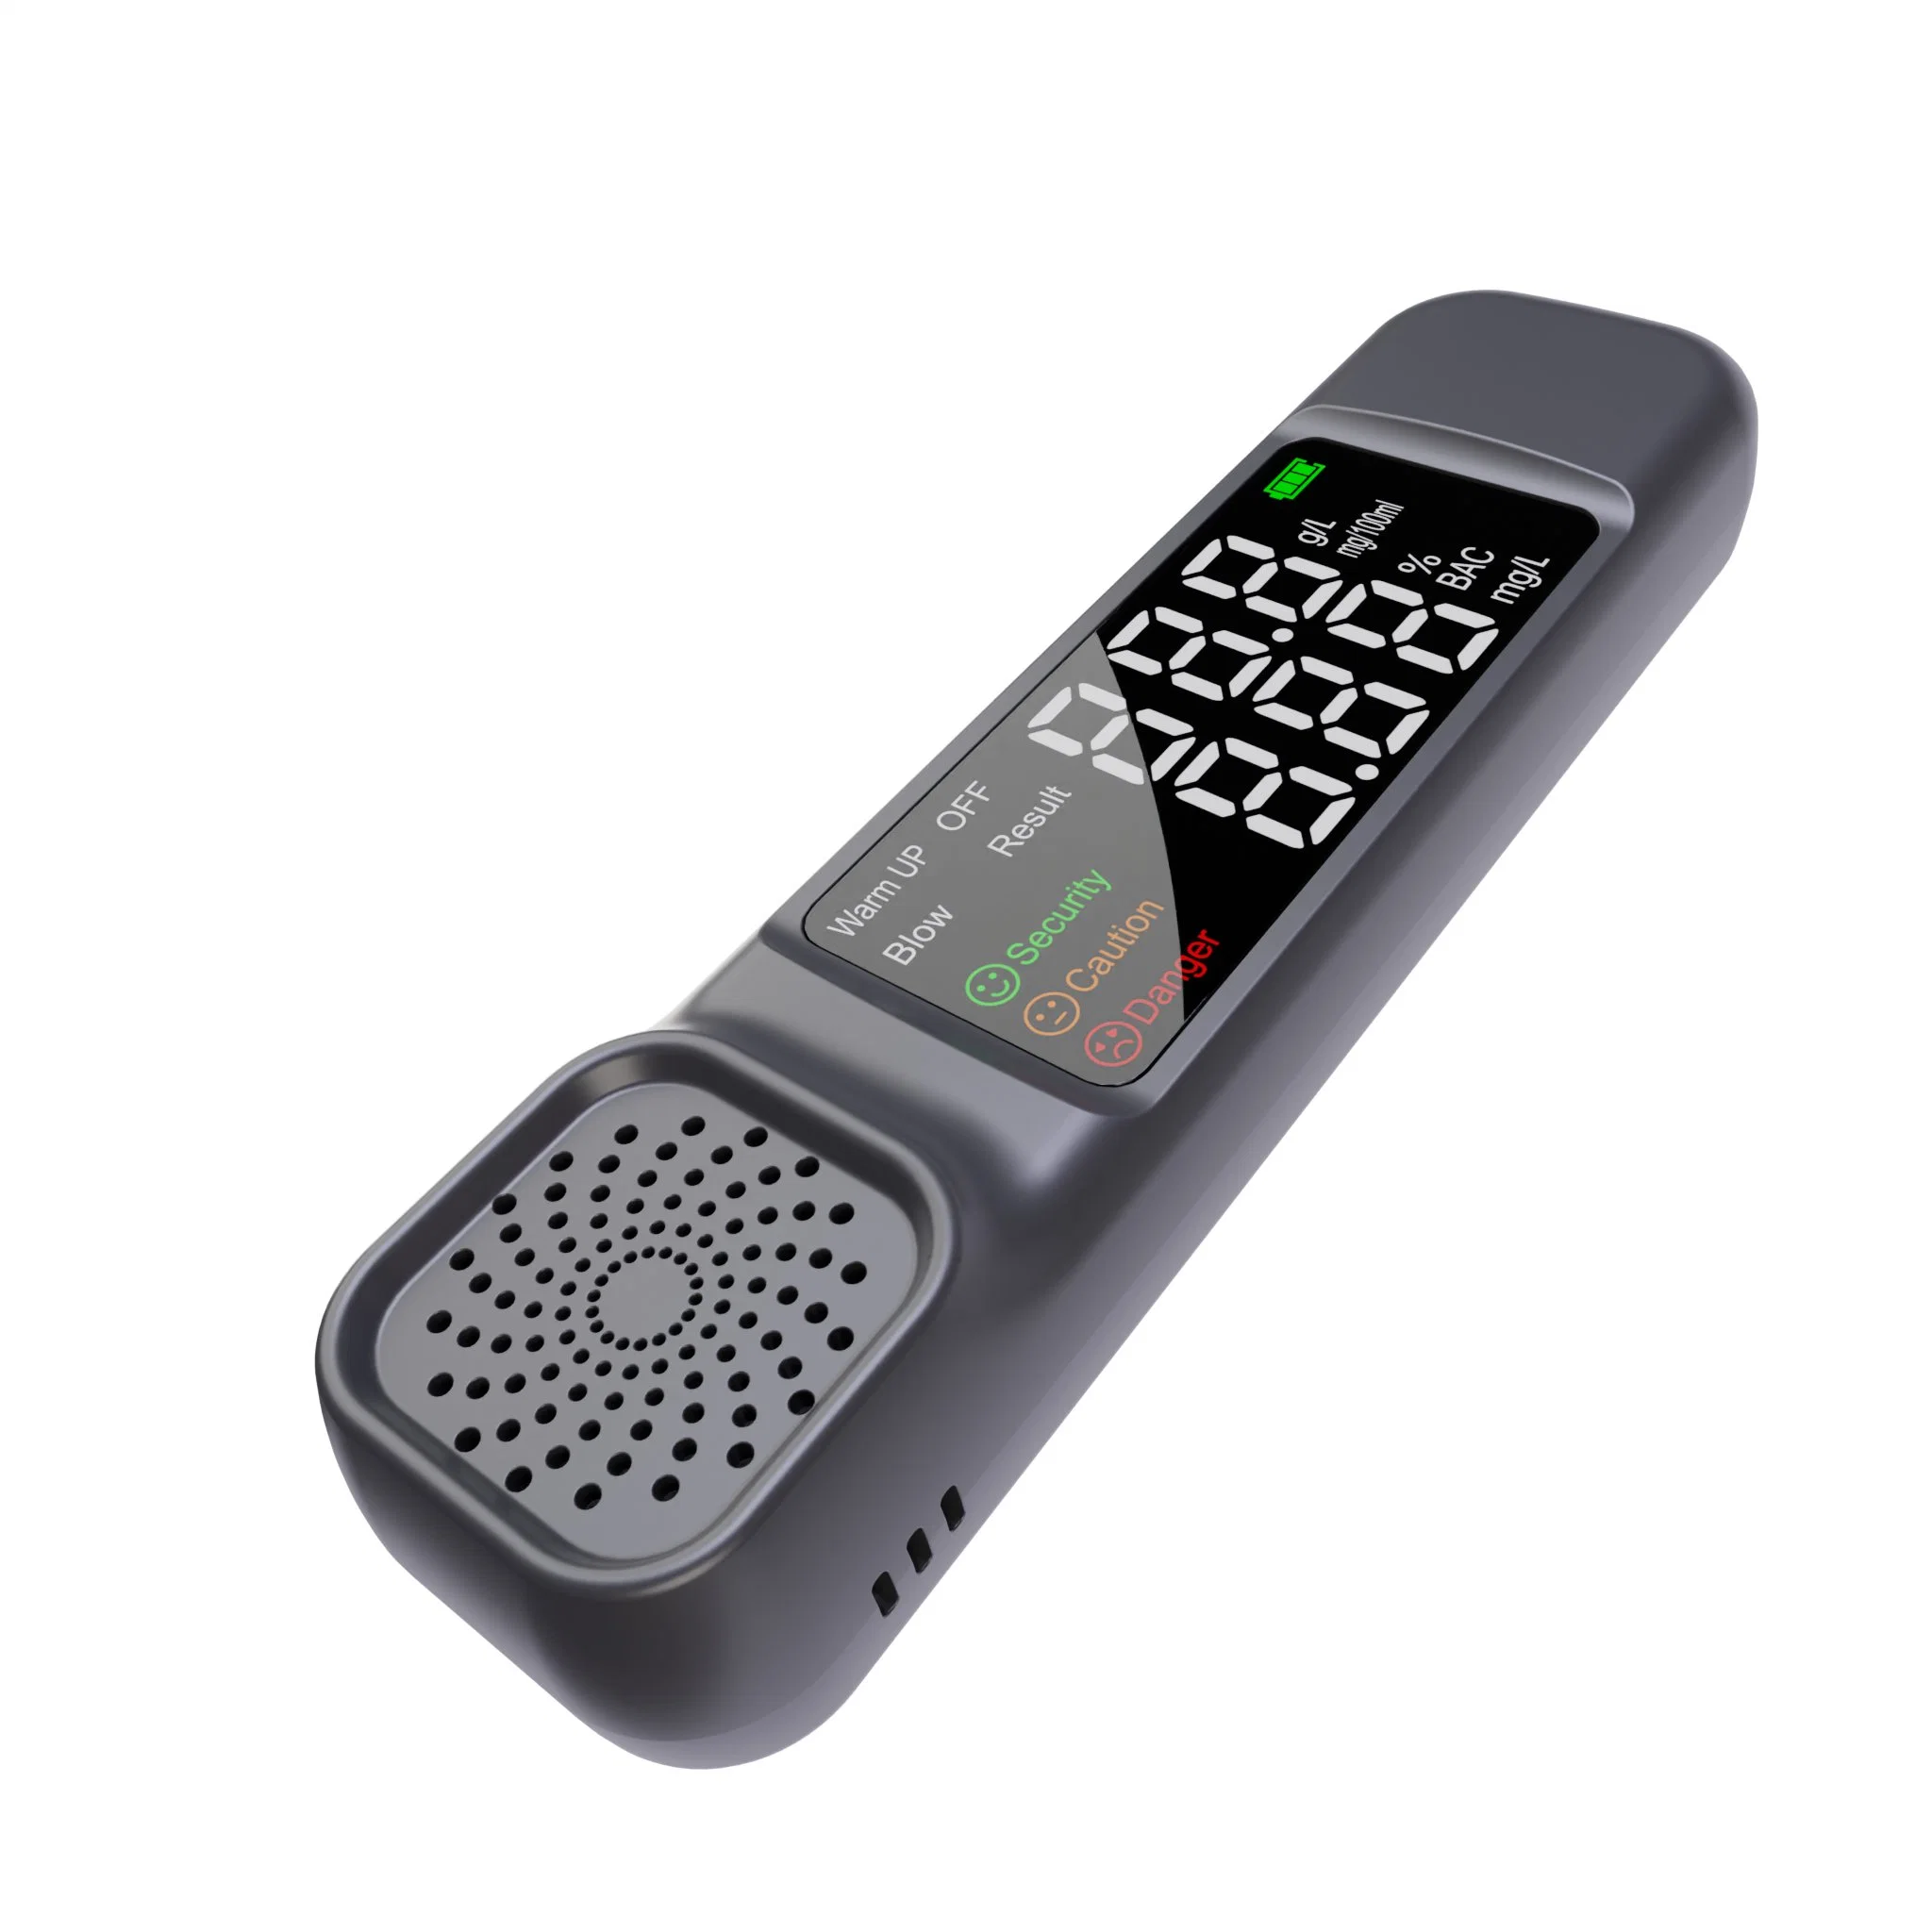 Best Selling Portable Handheld Digital Alcohol Detector Meter Checker Breath Tester Alcoholtester Breathalyzer